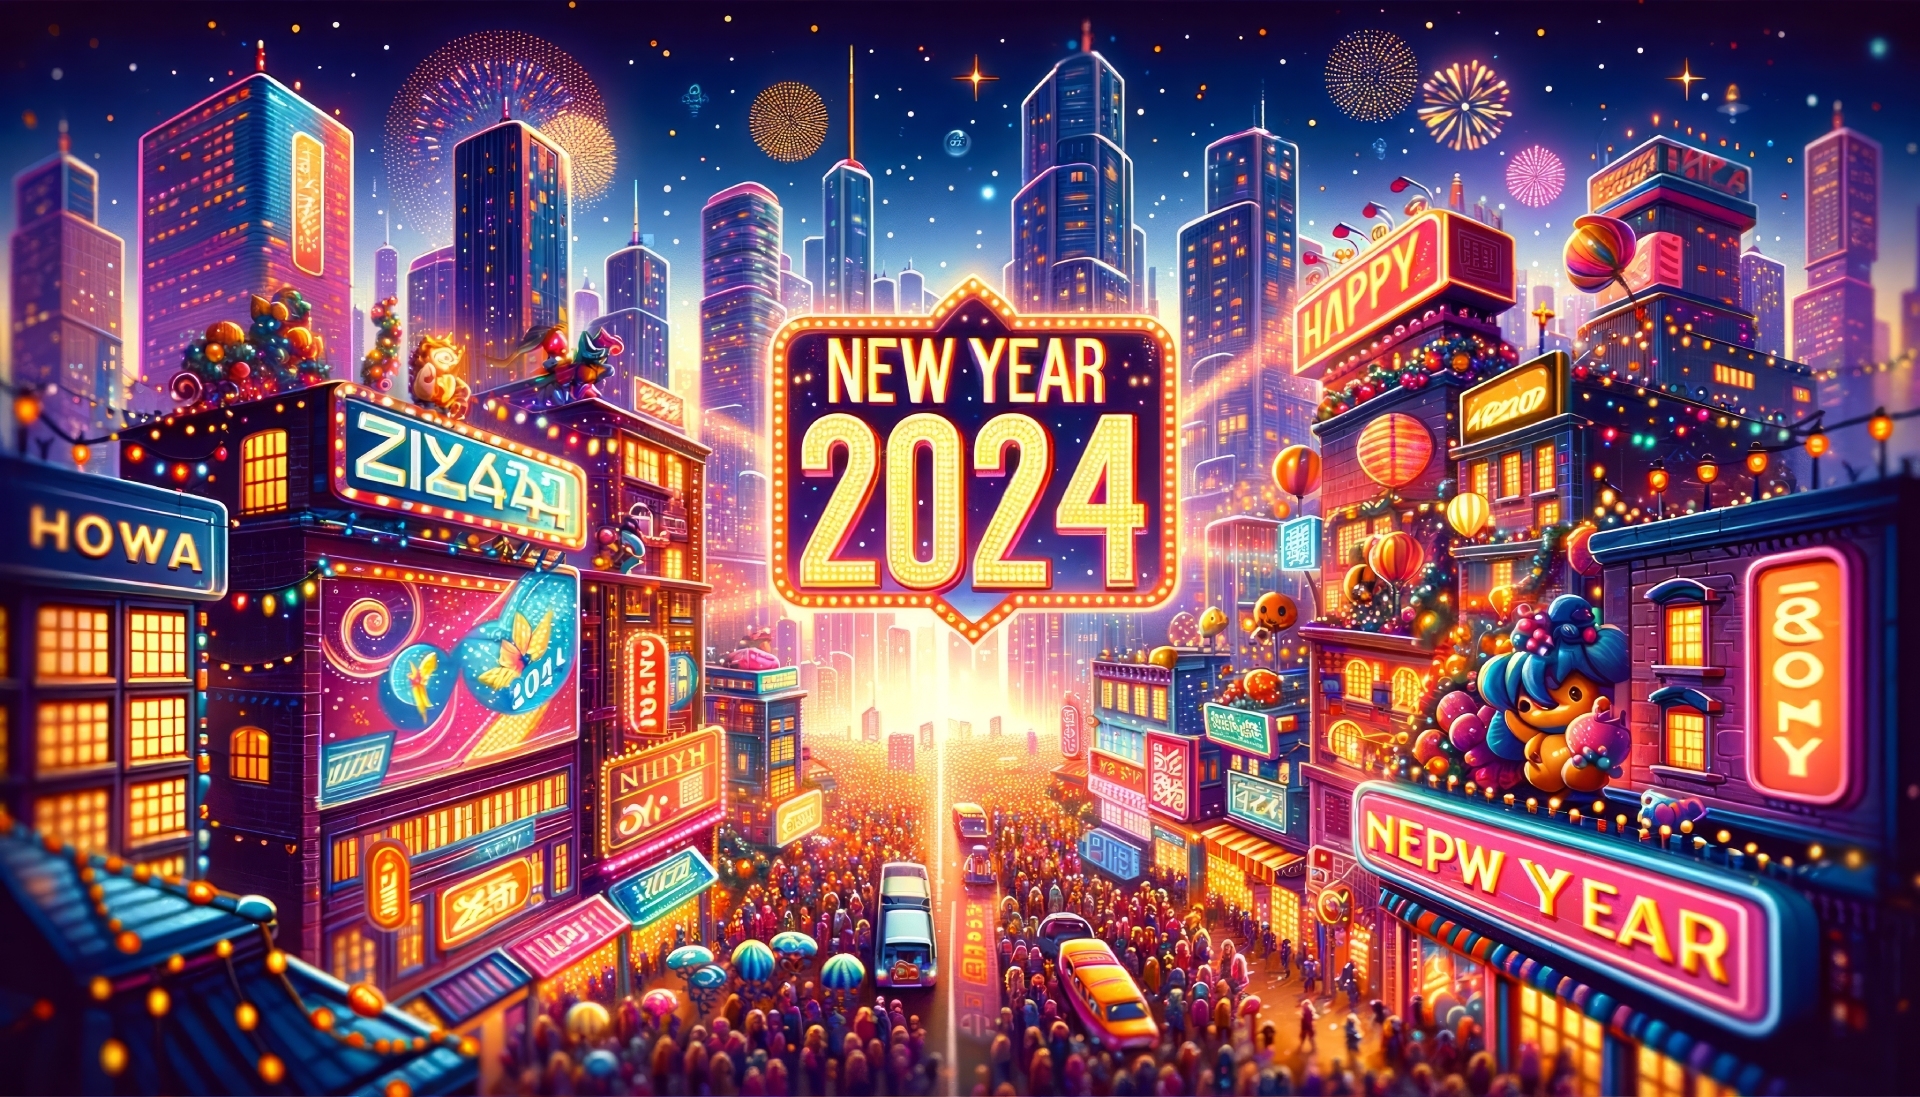 Happy New Year 2024 BmdlZmyUmZqaraWkpJRmbmdlrWZlbmw 